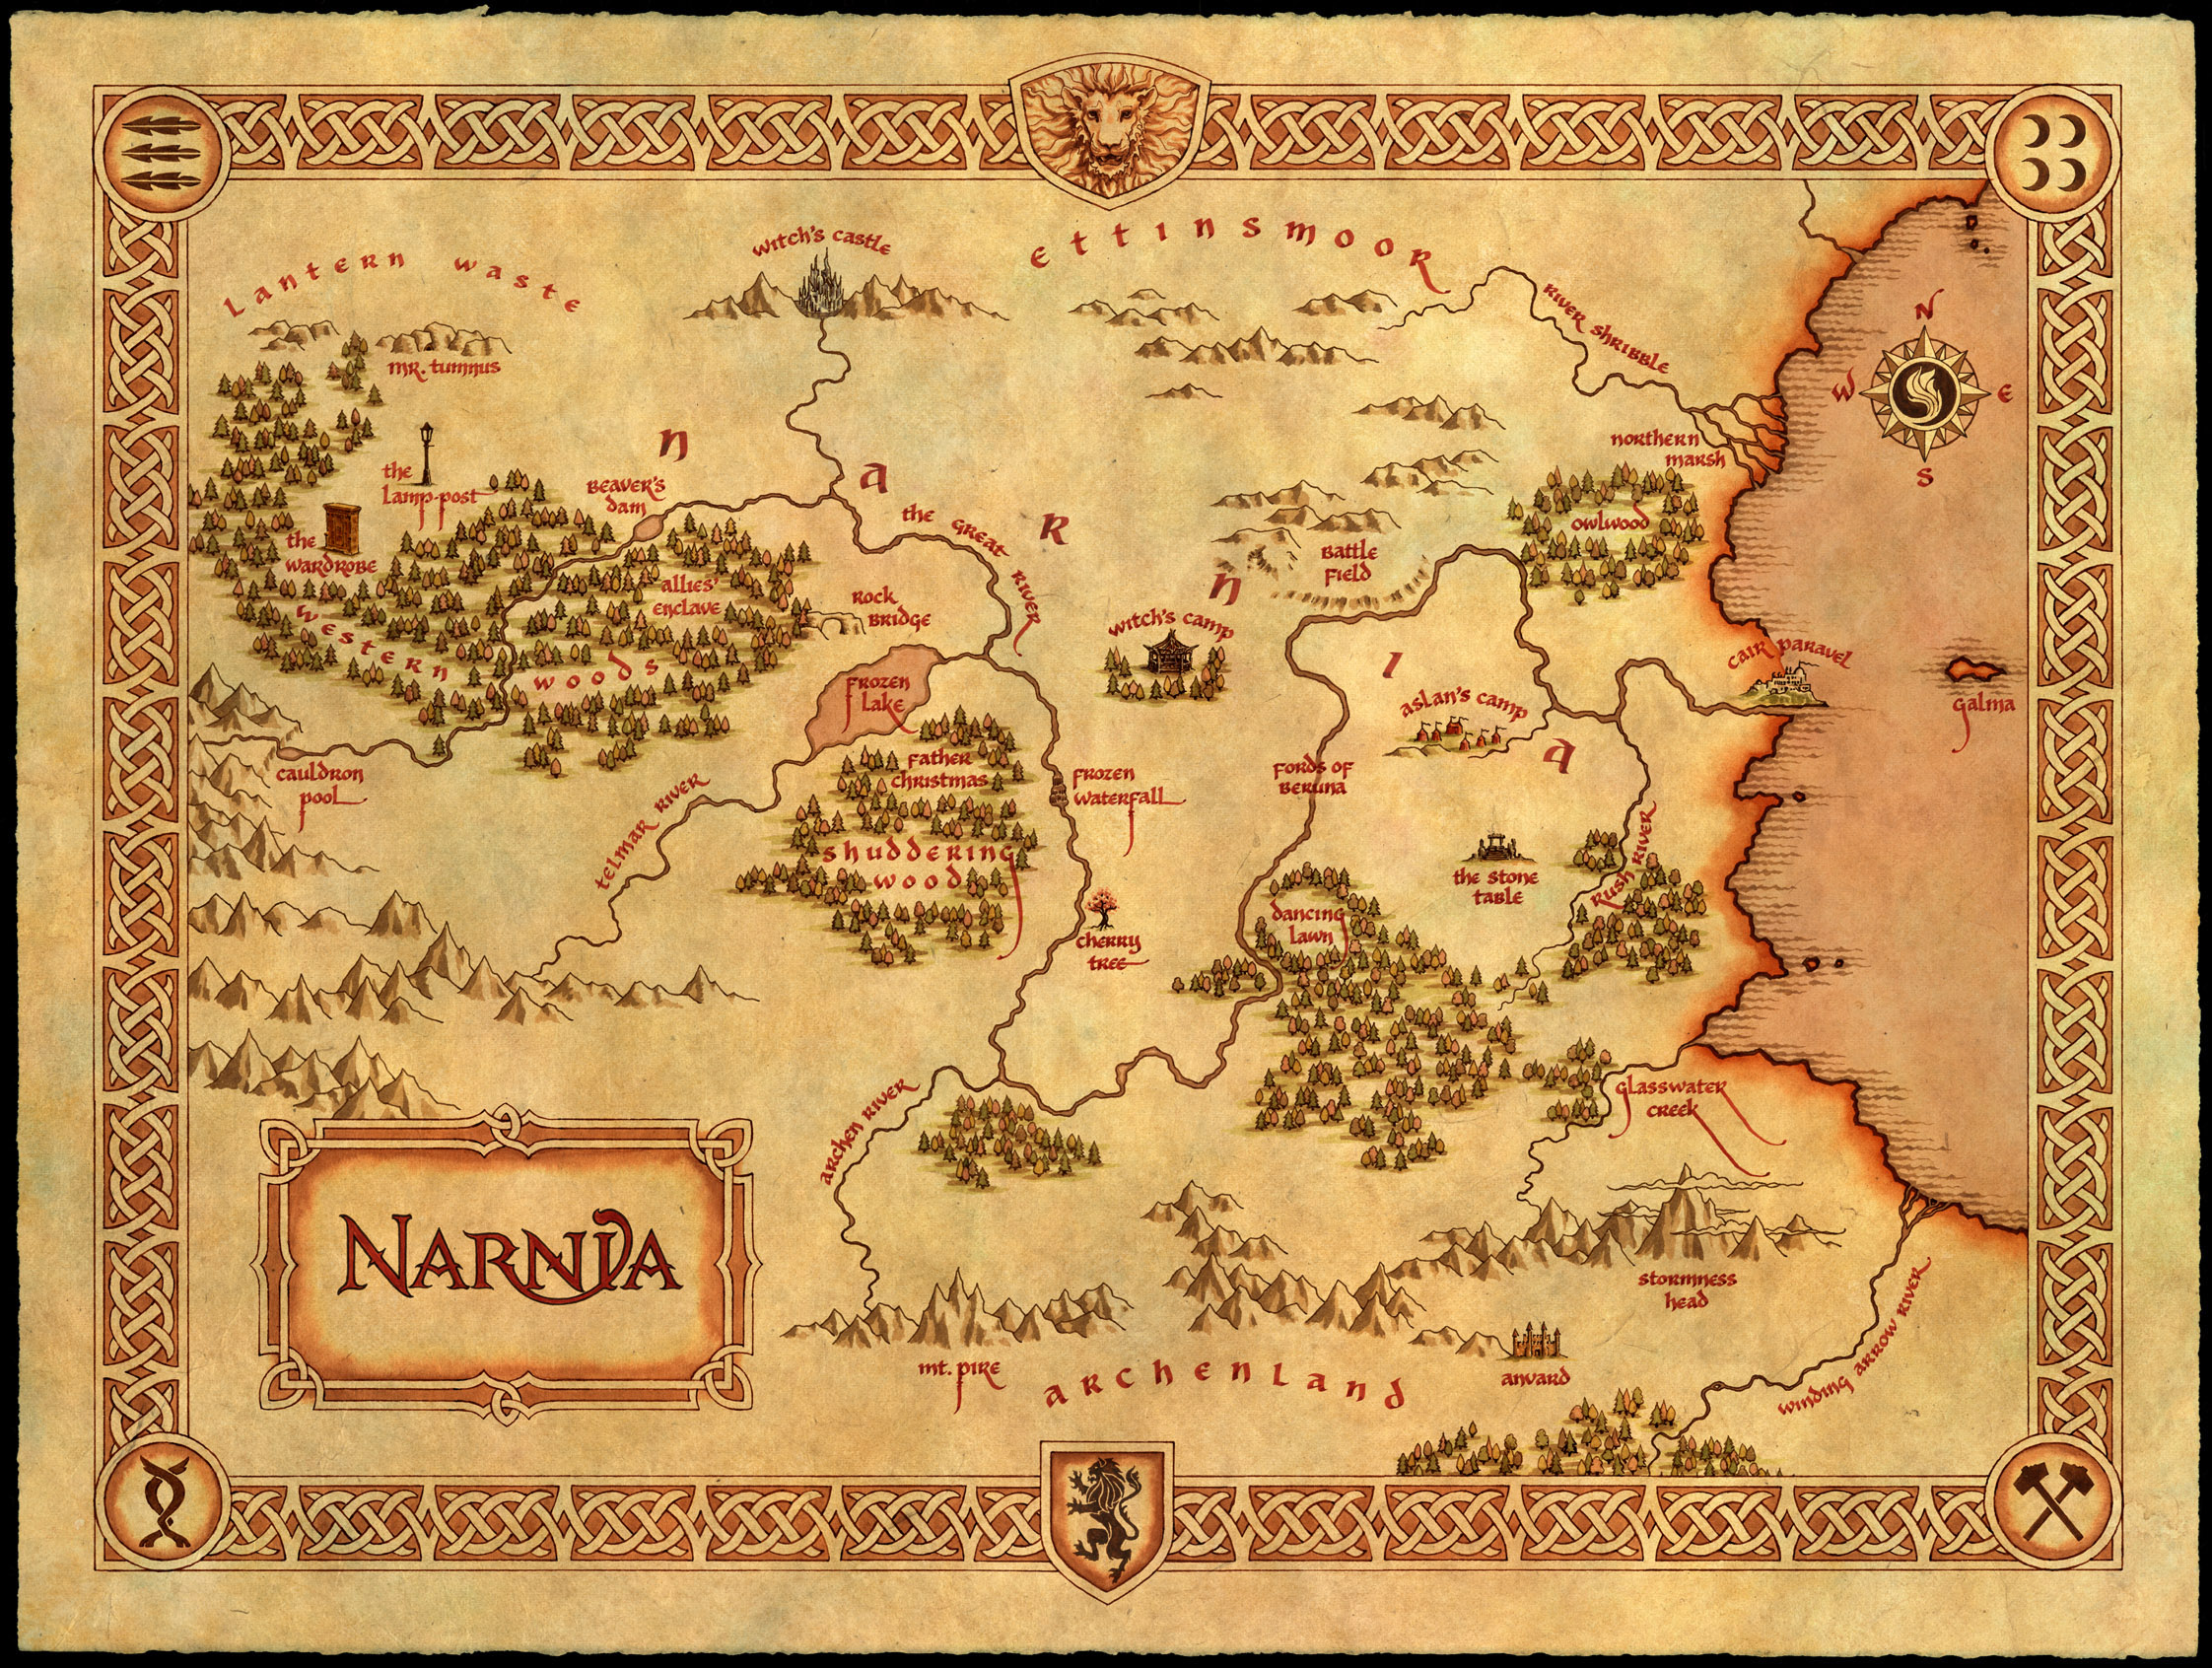 NarniaMap_fullsize.jpg